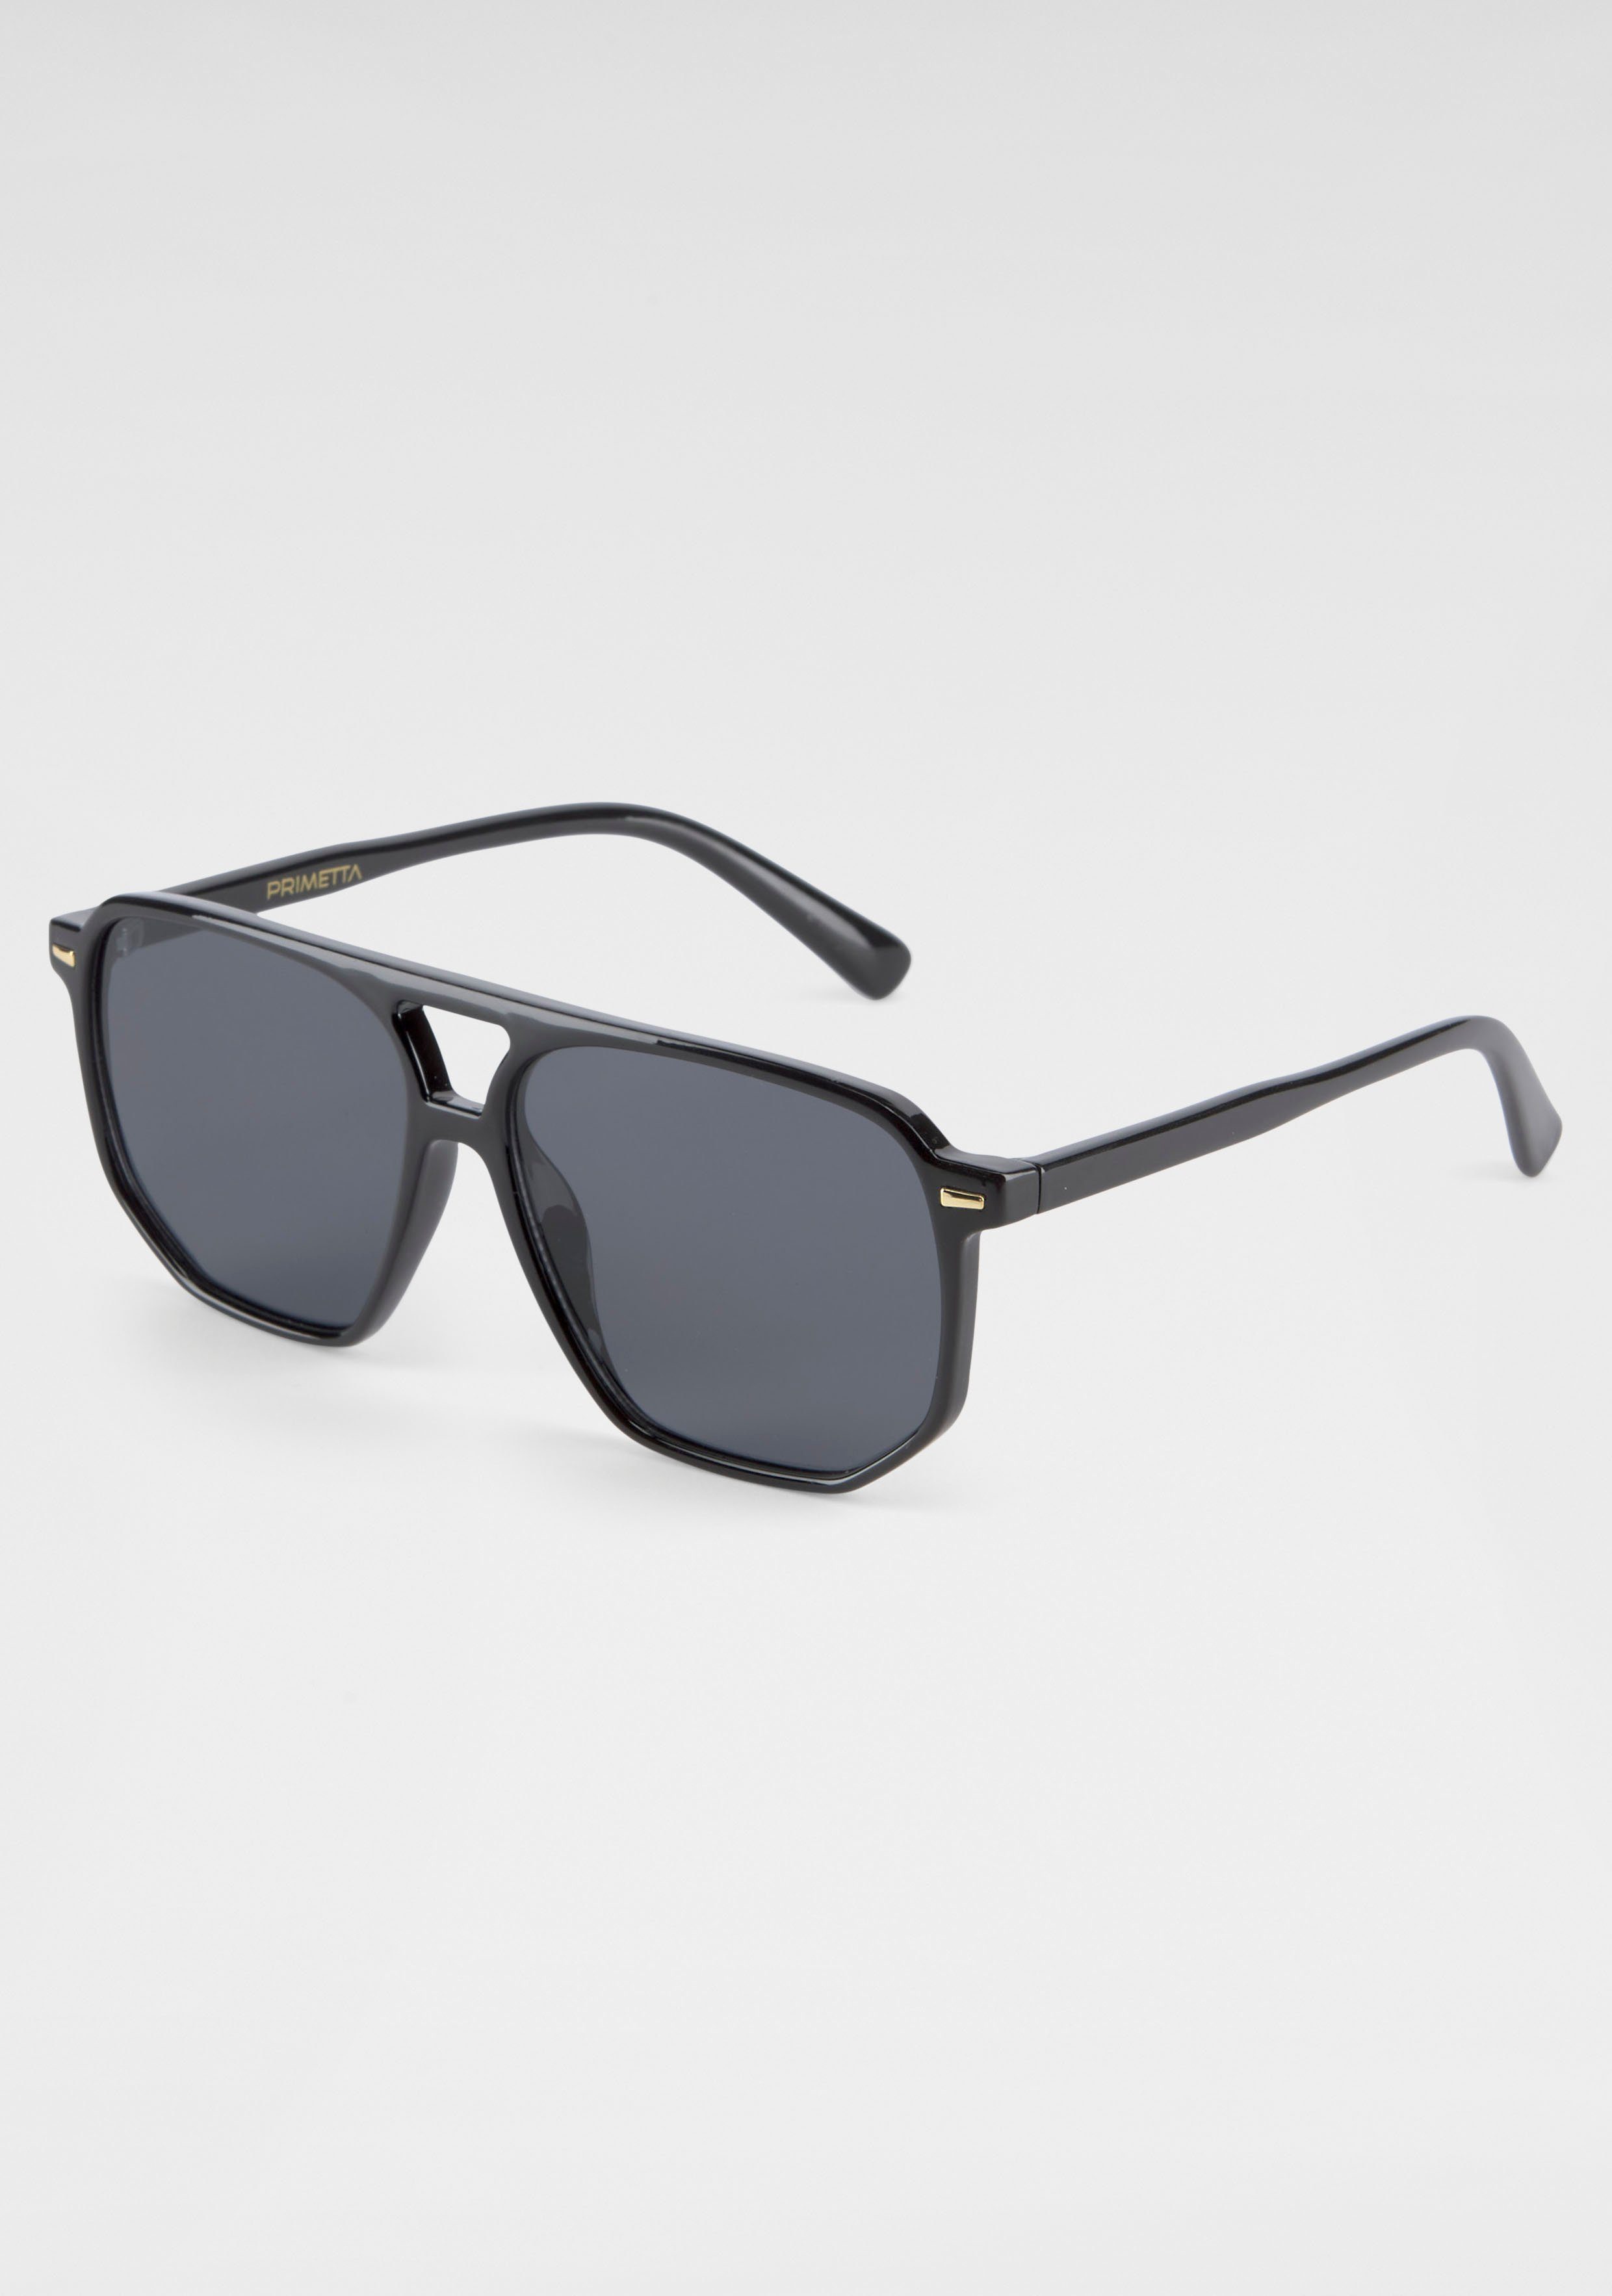 YOUNG SPIRIT LONDON Eyewear Sonnenbrille Trendige Vollrand-Sonnenbrille schwarz | Sonnenbrillen